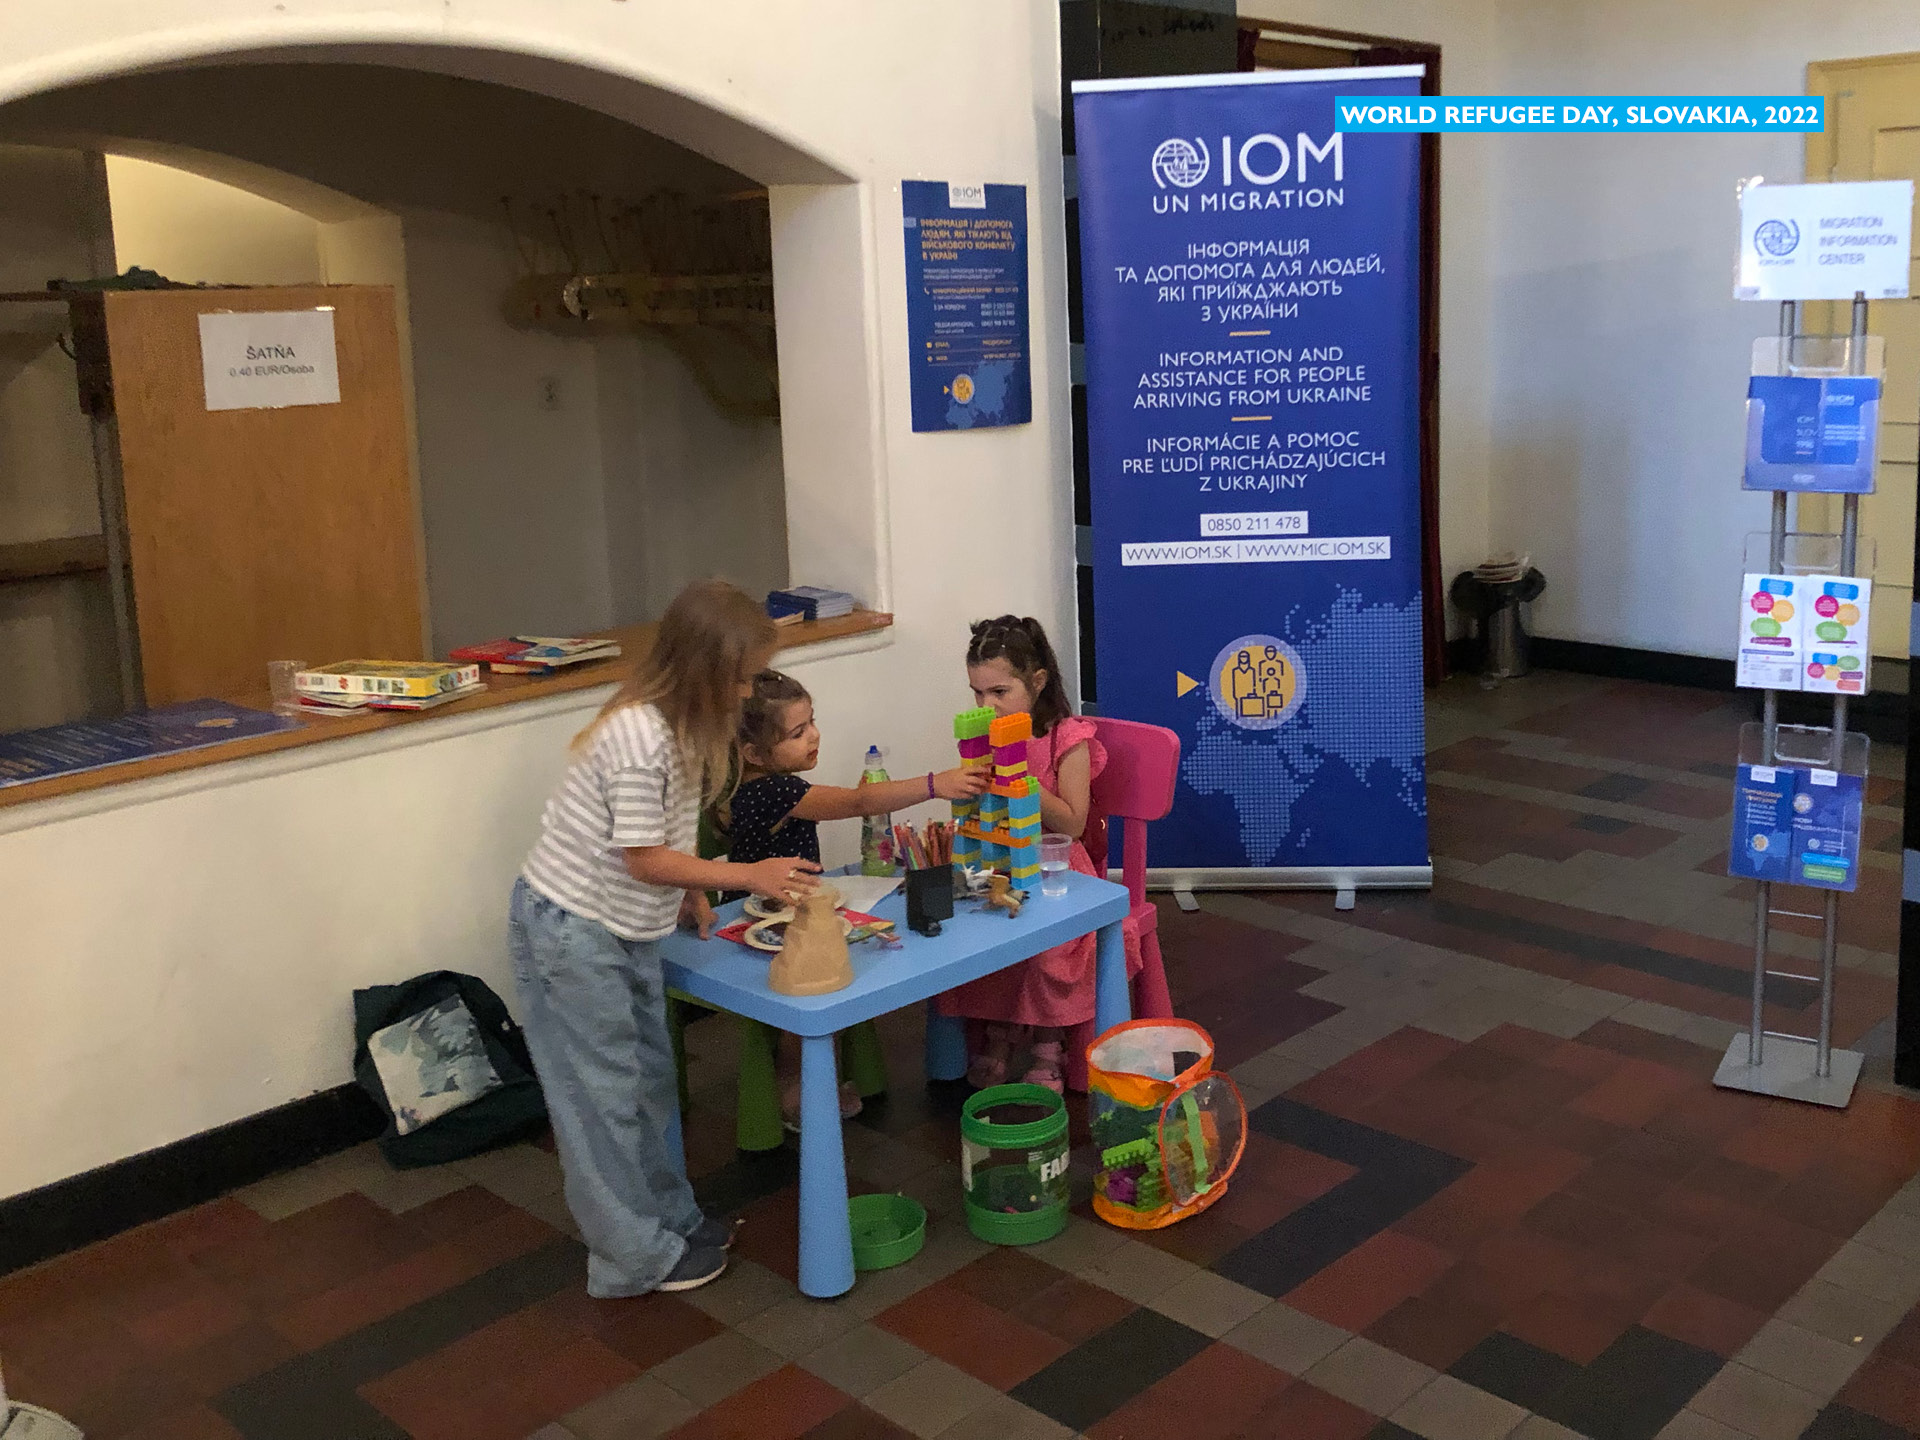 IOM children’s corner at the event in Košice – World Refuee Day 2022. Photo © International Organization for Migration (IOM) 2022.